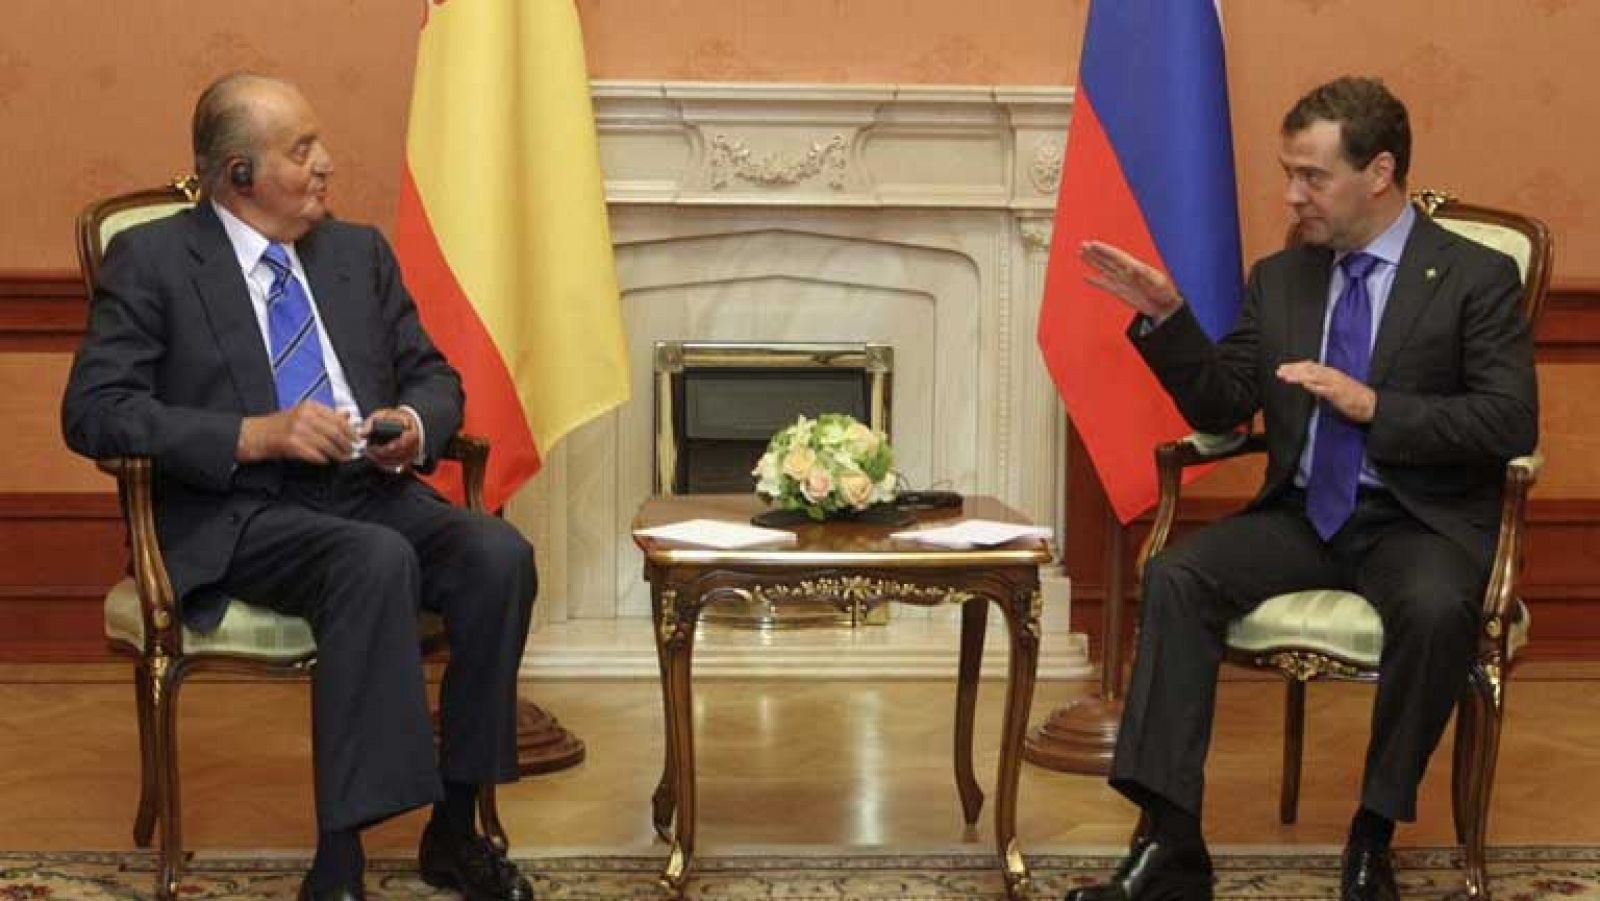 Telediario 1: El rey se reúne con Putin | RTVE Play